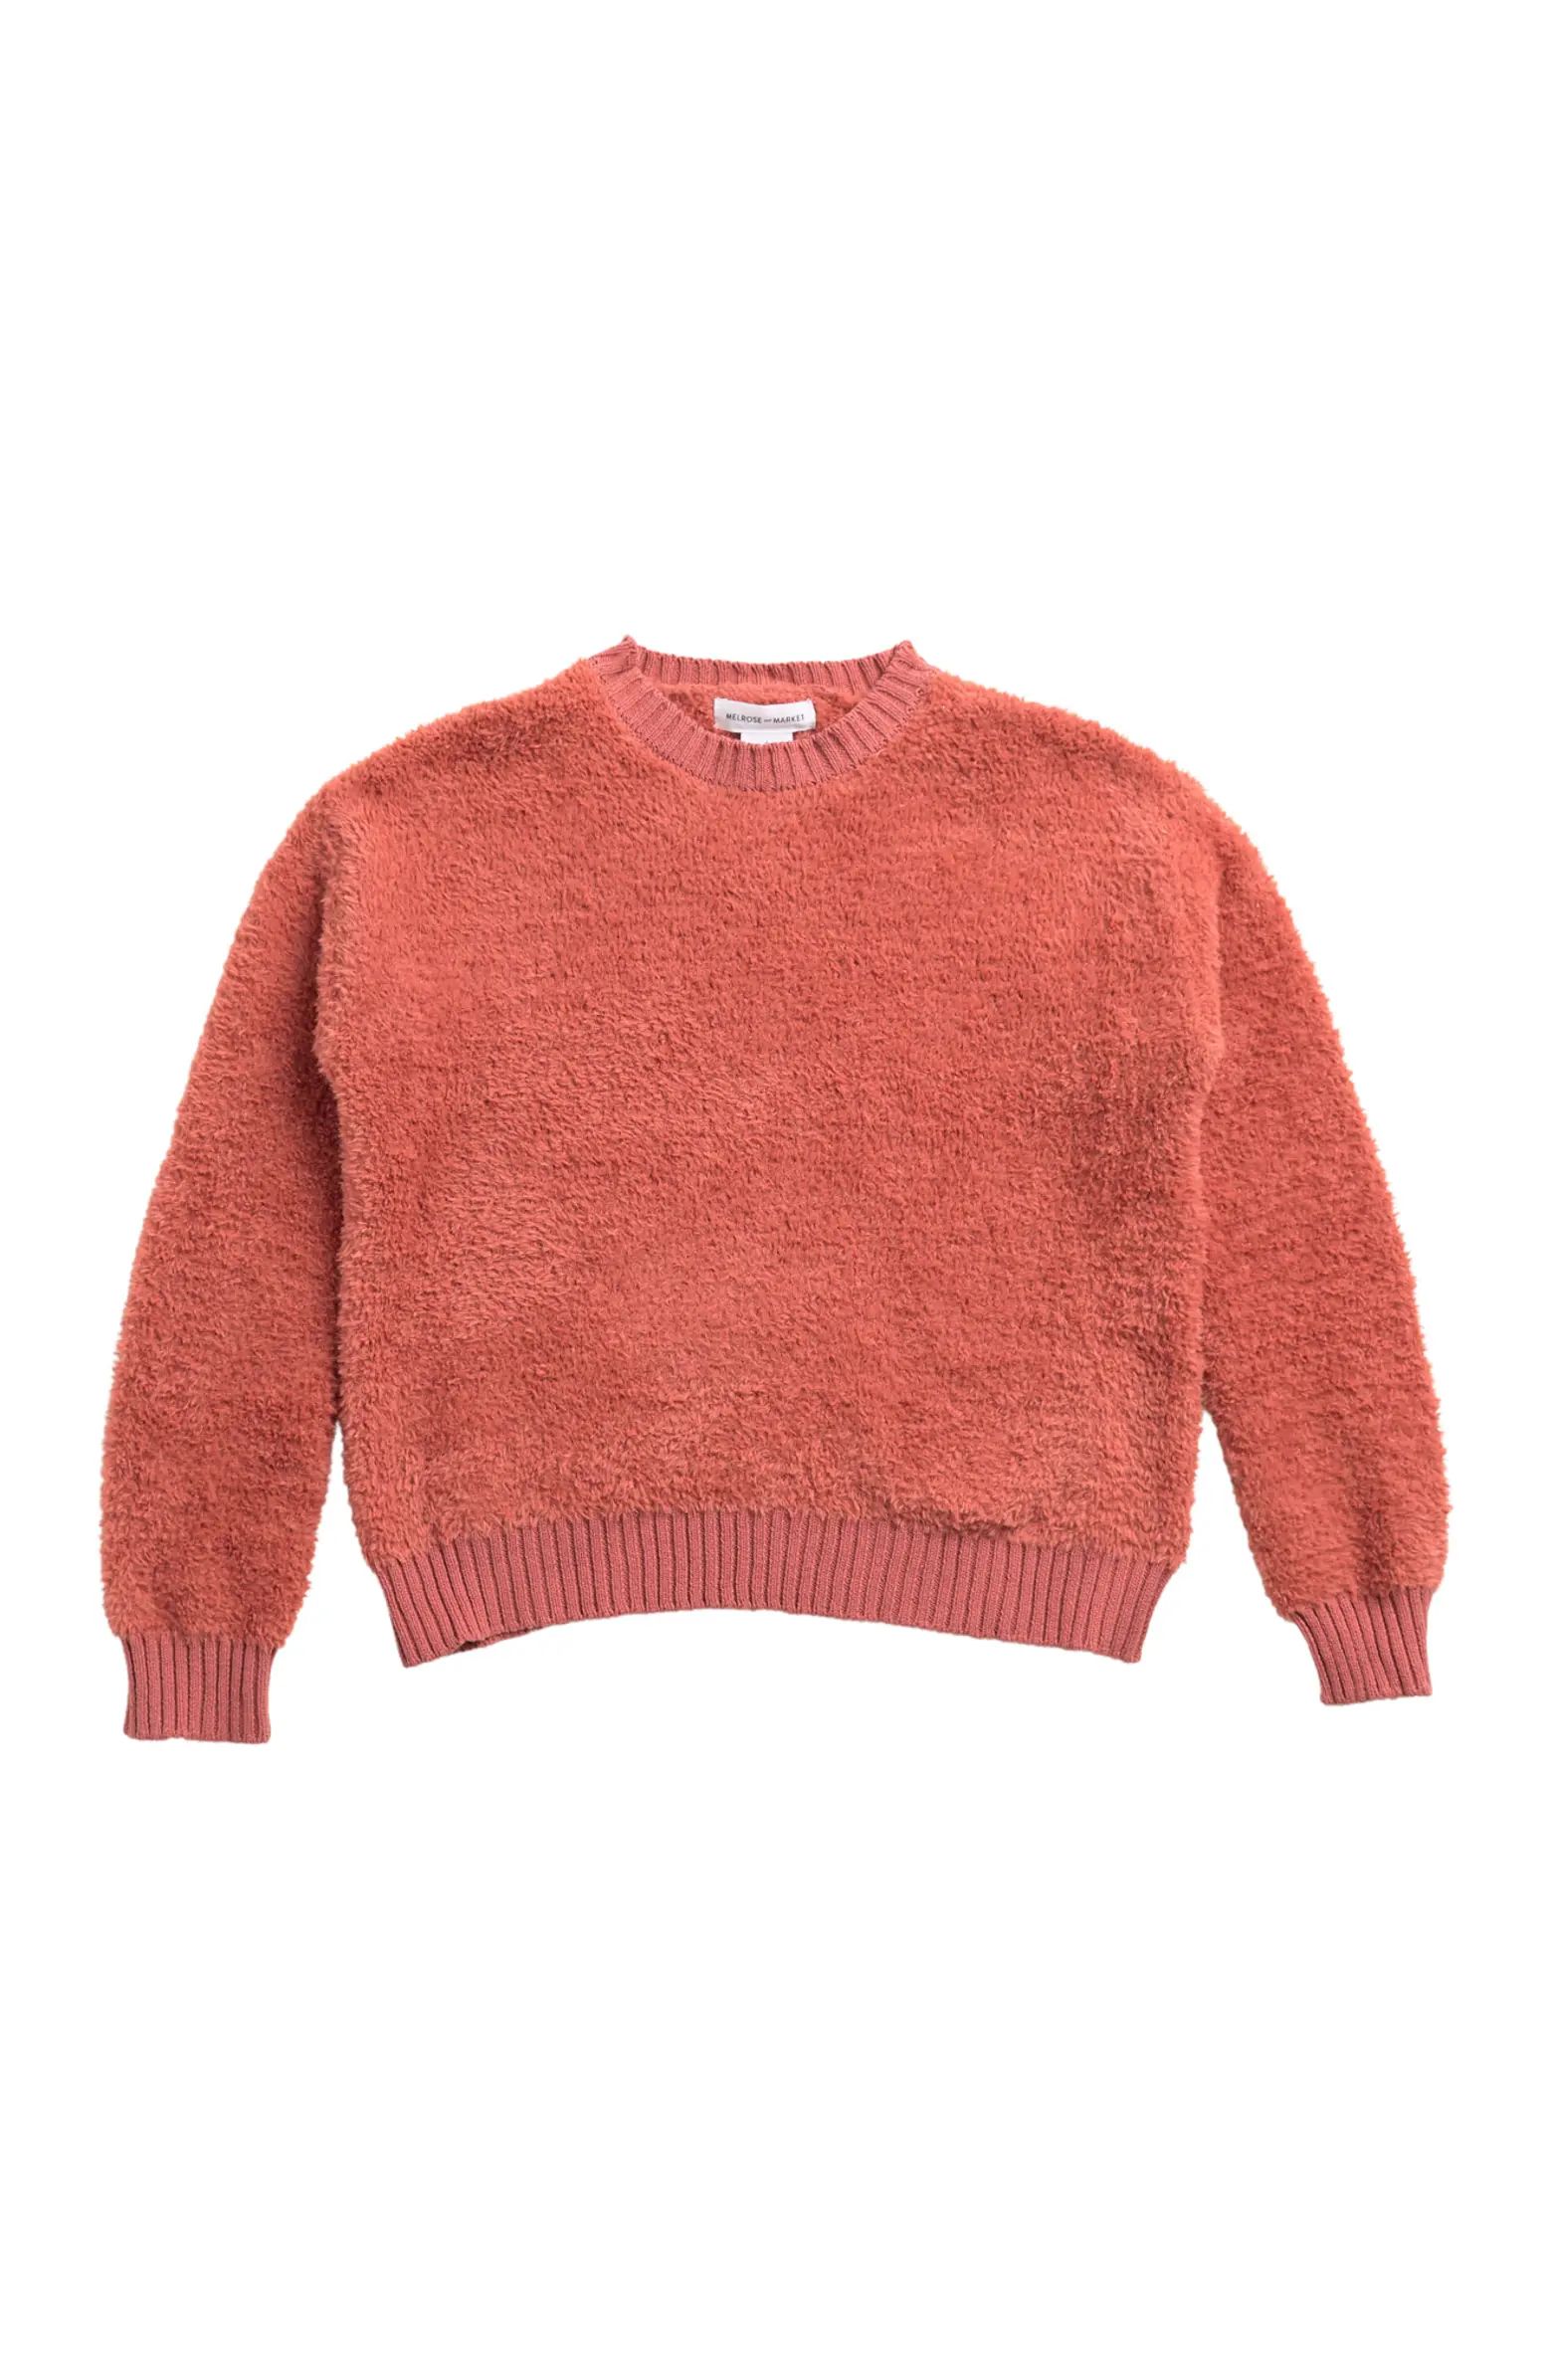 MELROSE AND MARKET Fuzzy Pullover Sweater | Nordstromrack | Nordstrom Rack